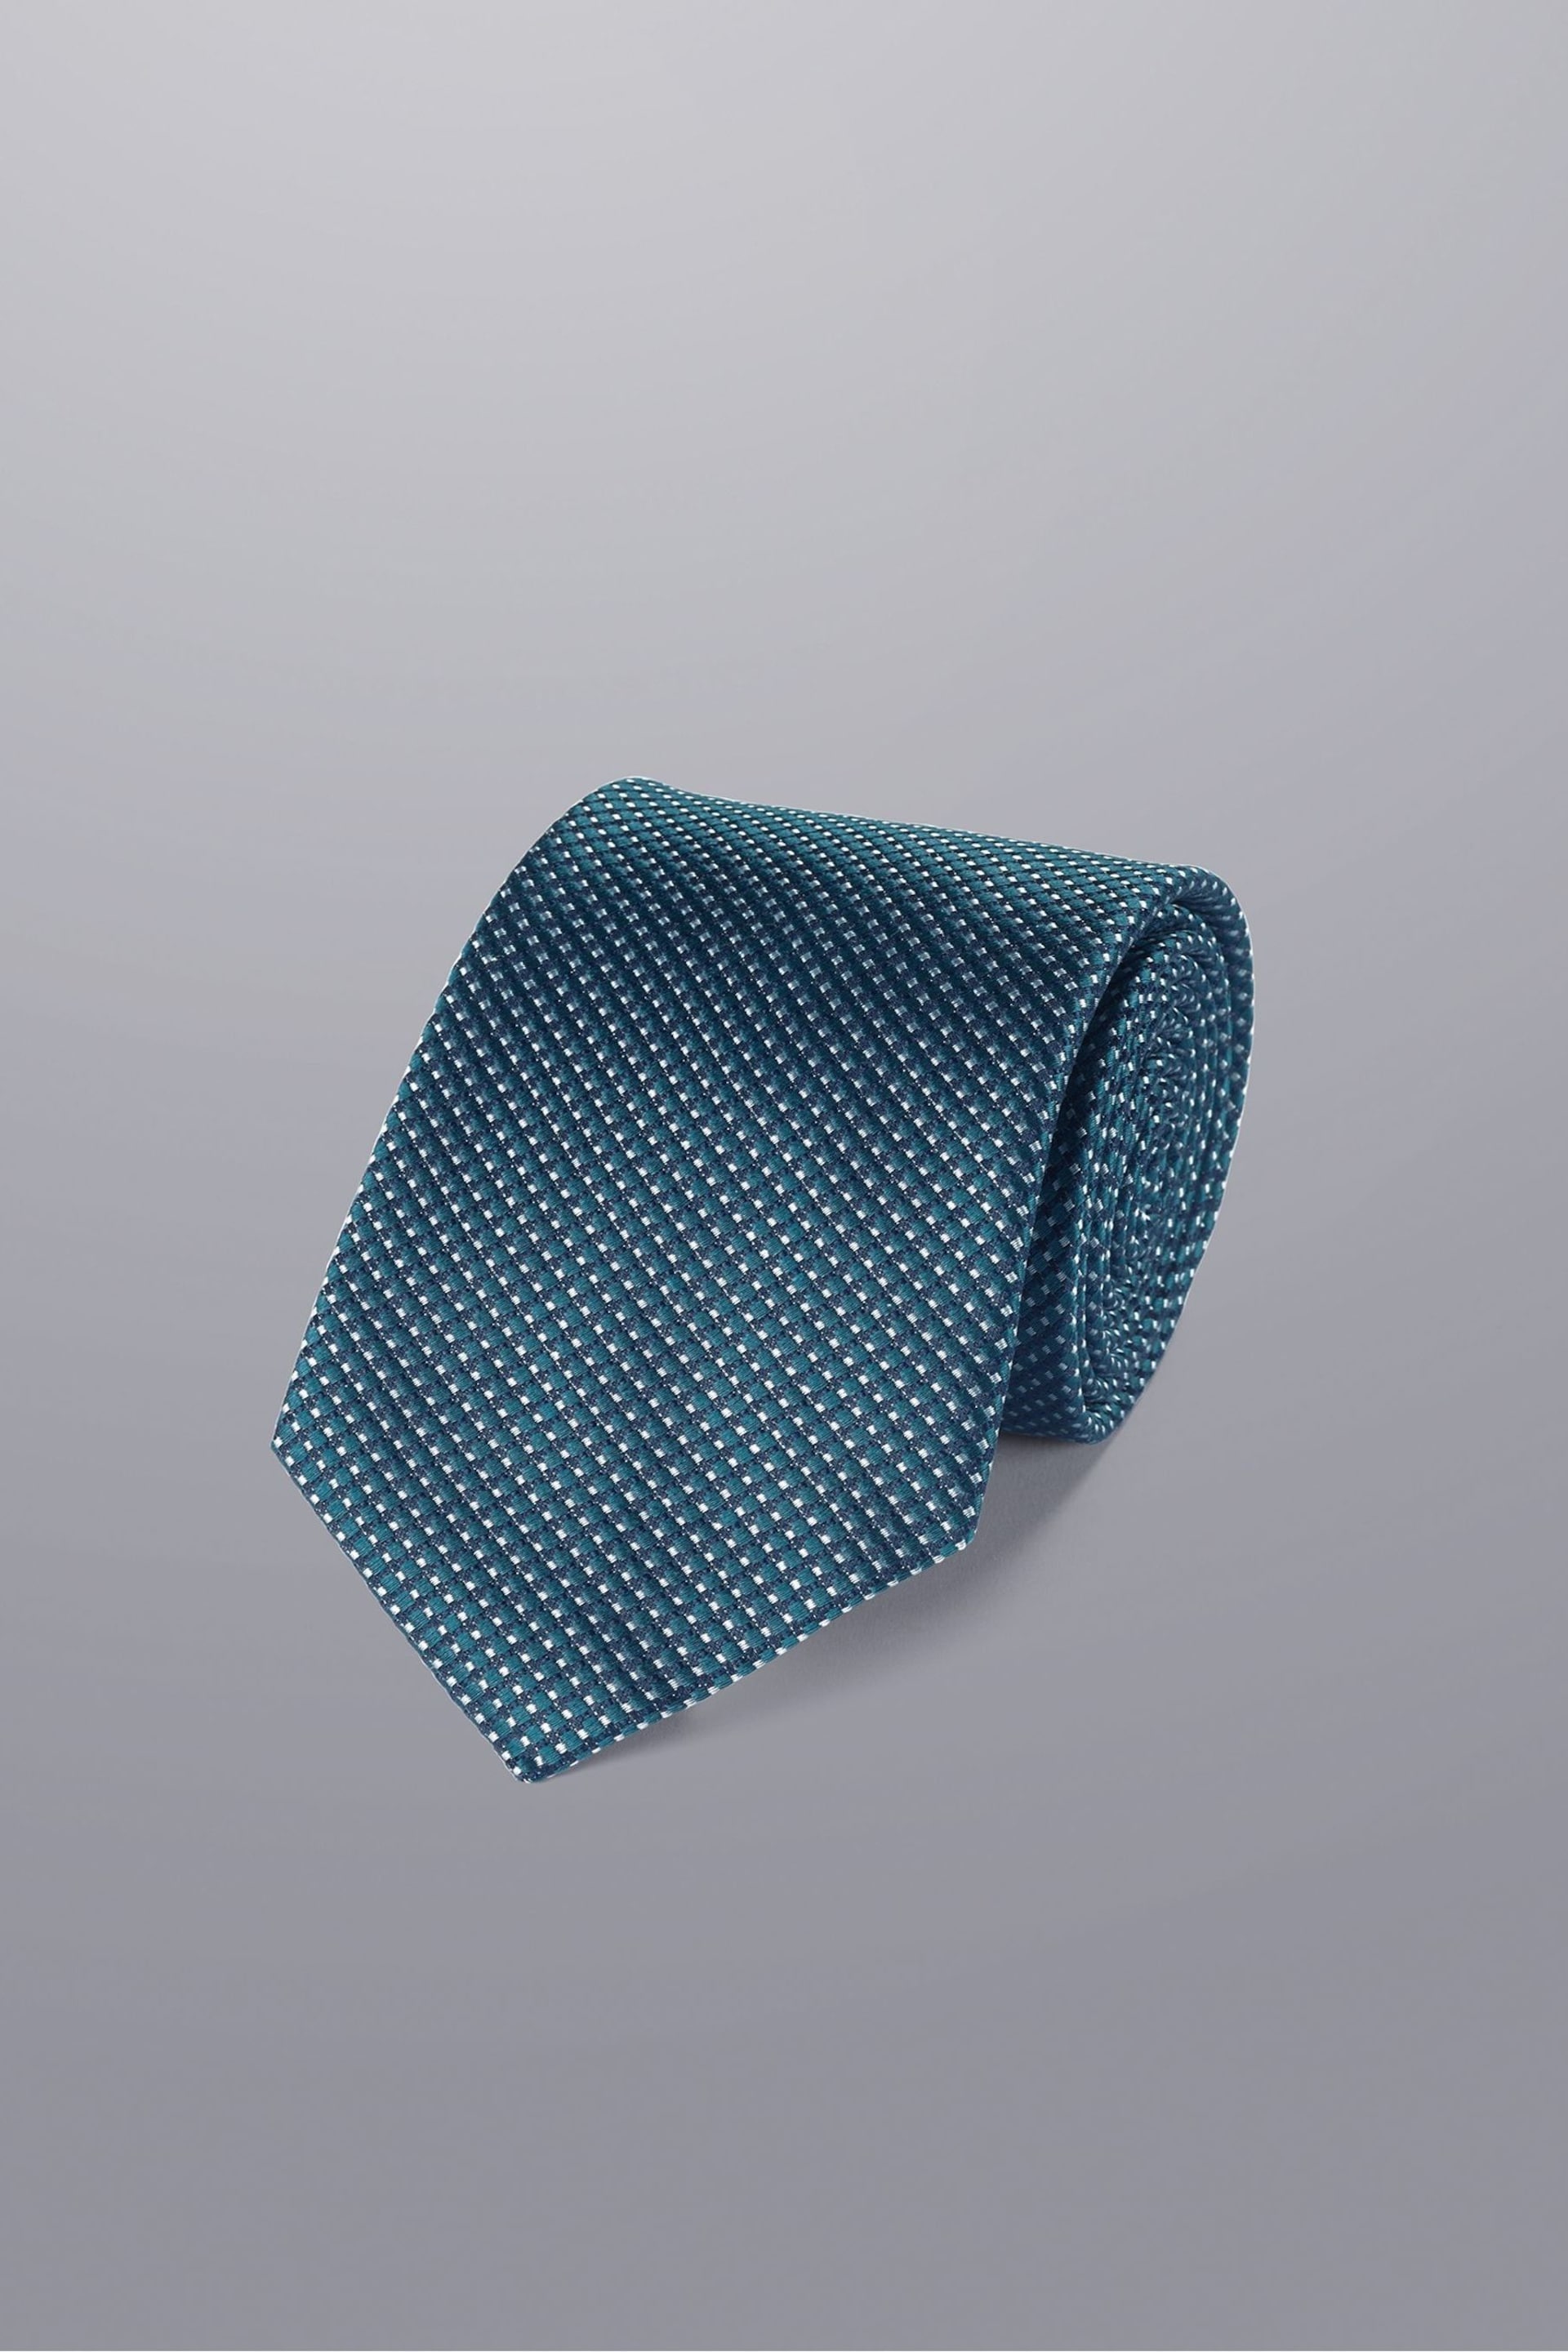 Charles Tyrwhitt Blue/White Semi Plain Silk Stain Resistant Pattern Tie - Image 1 of 2